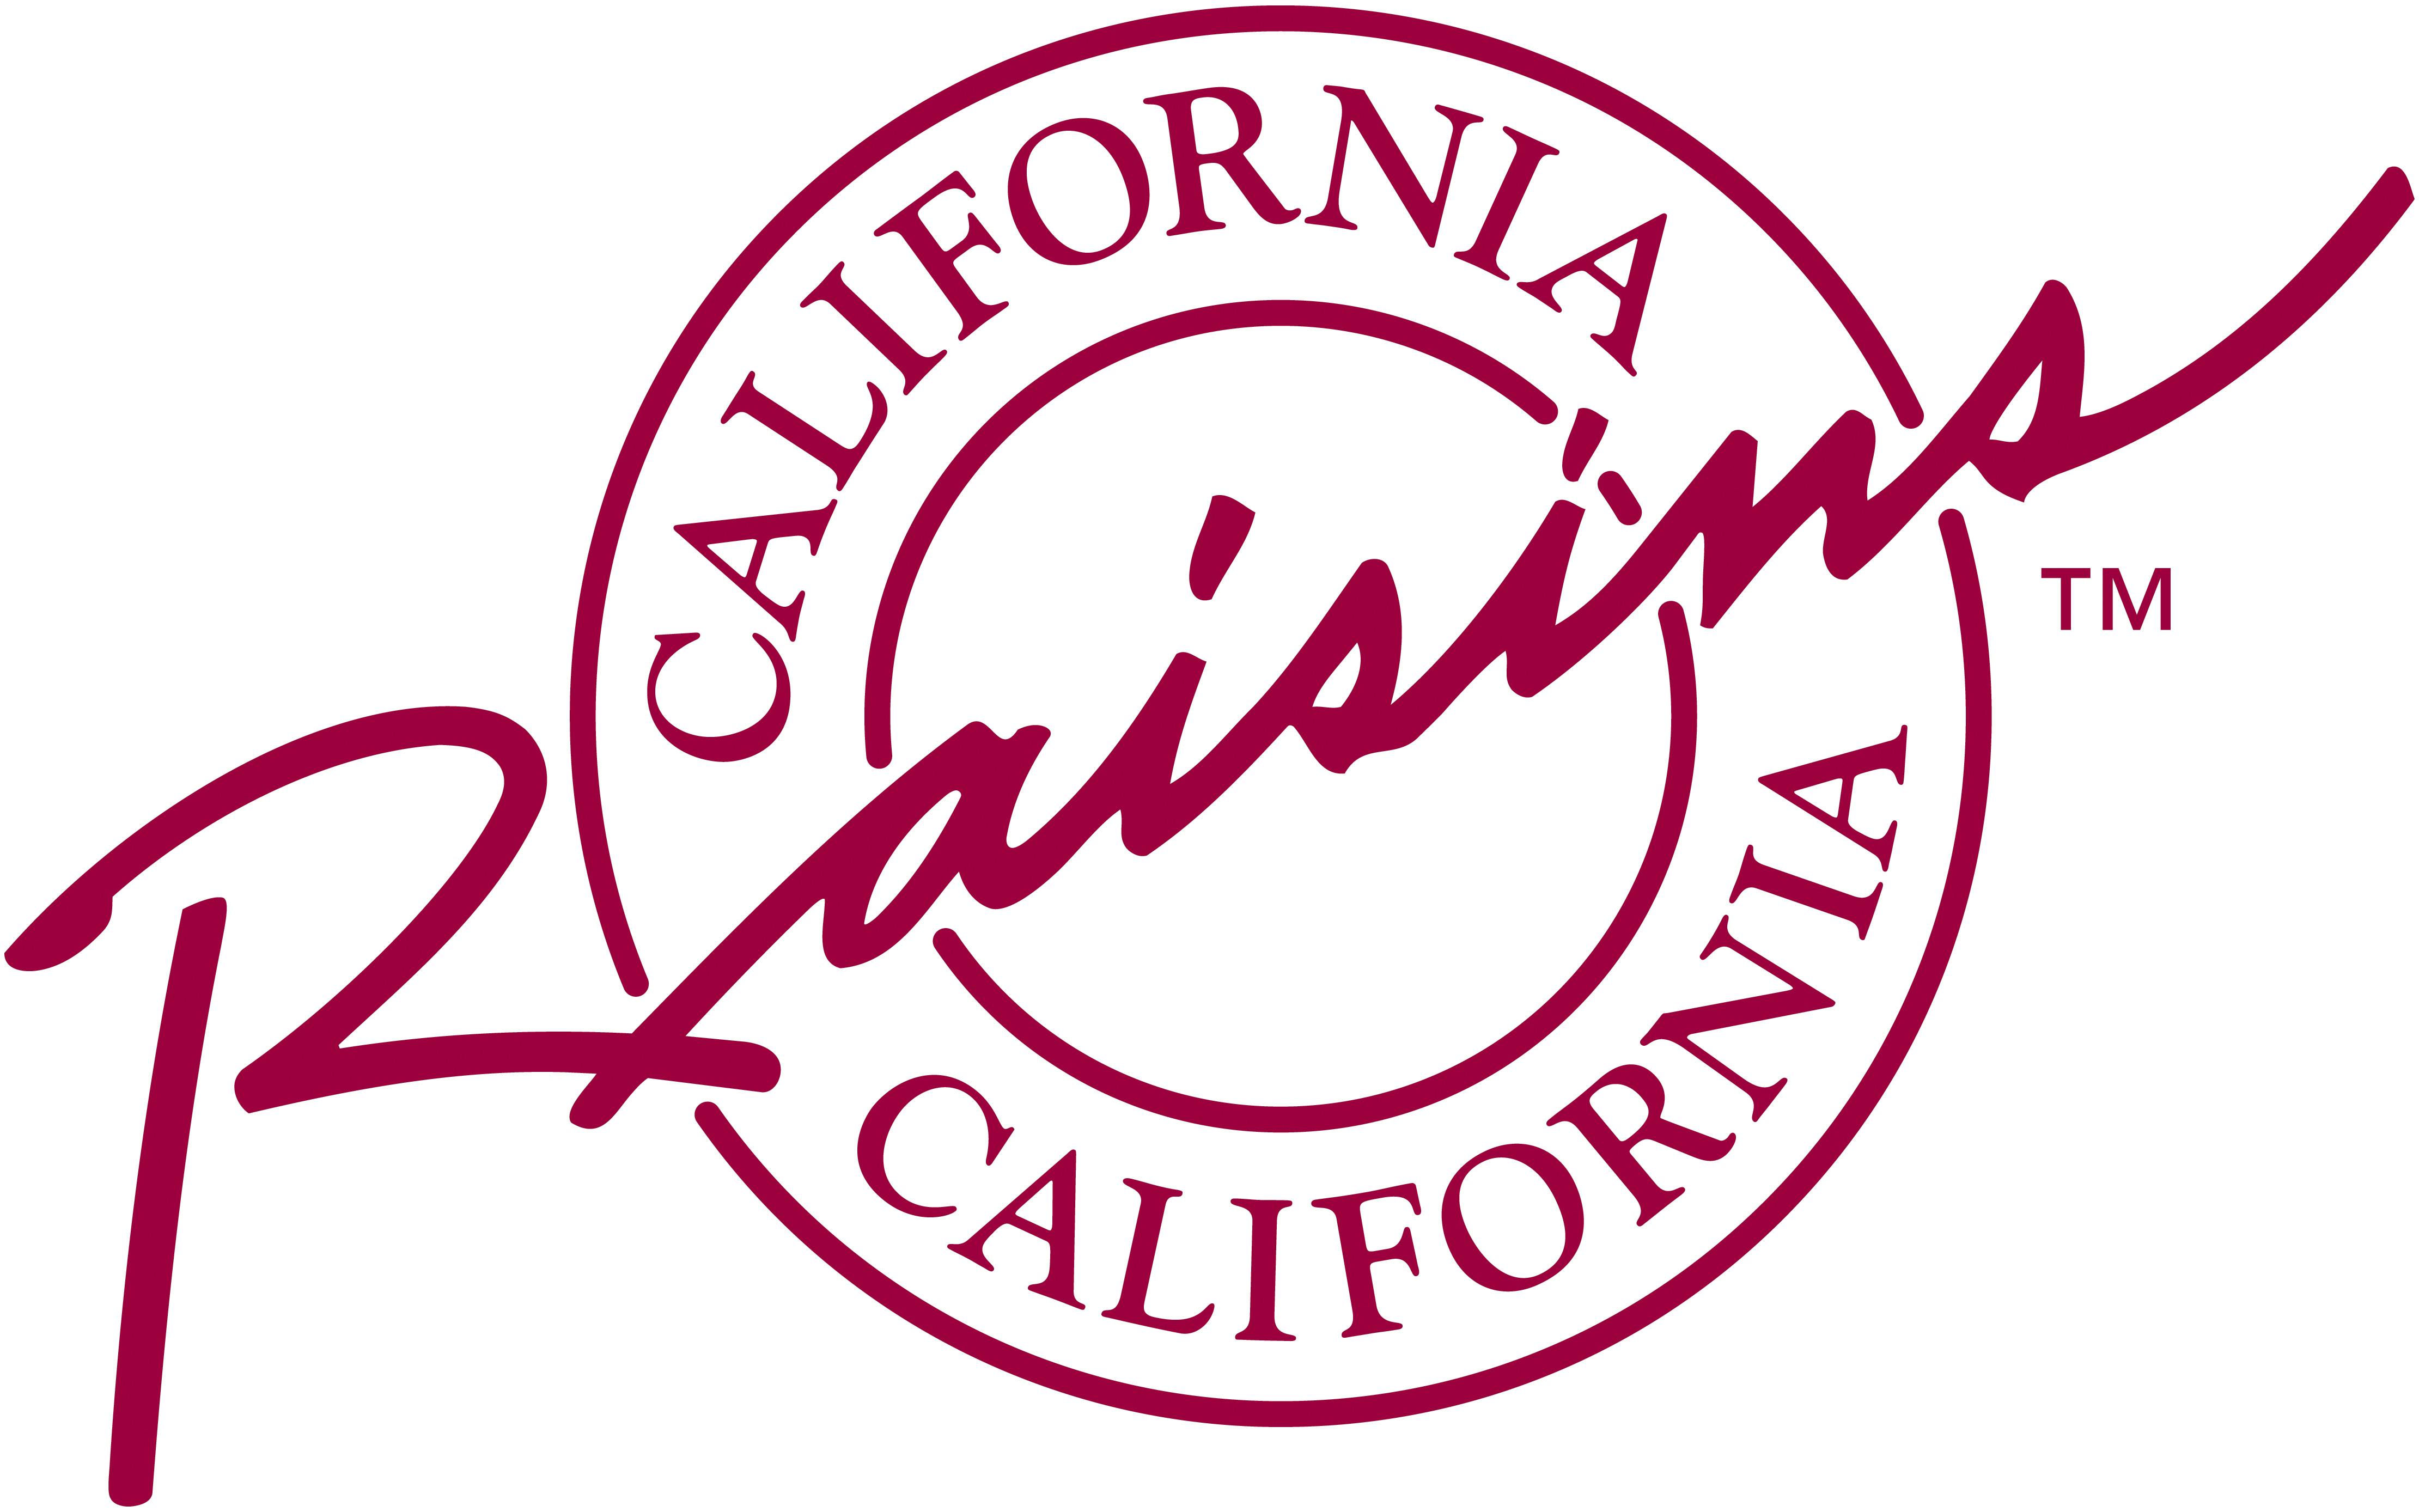 California raisins